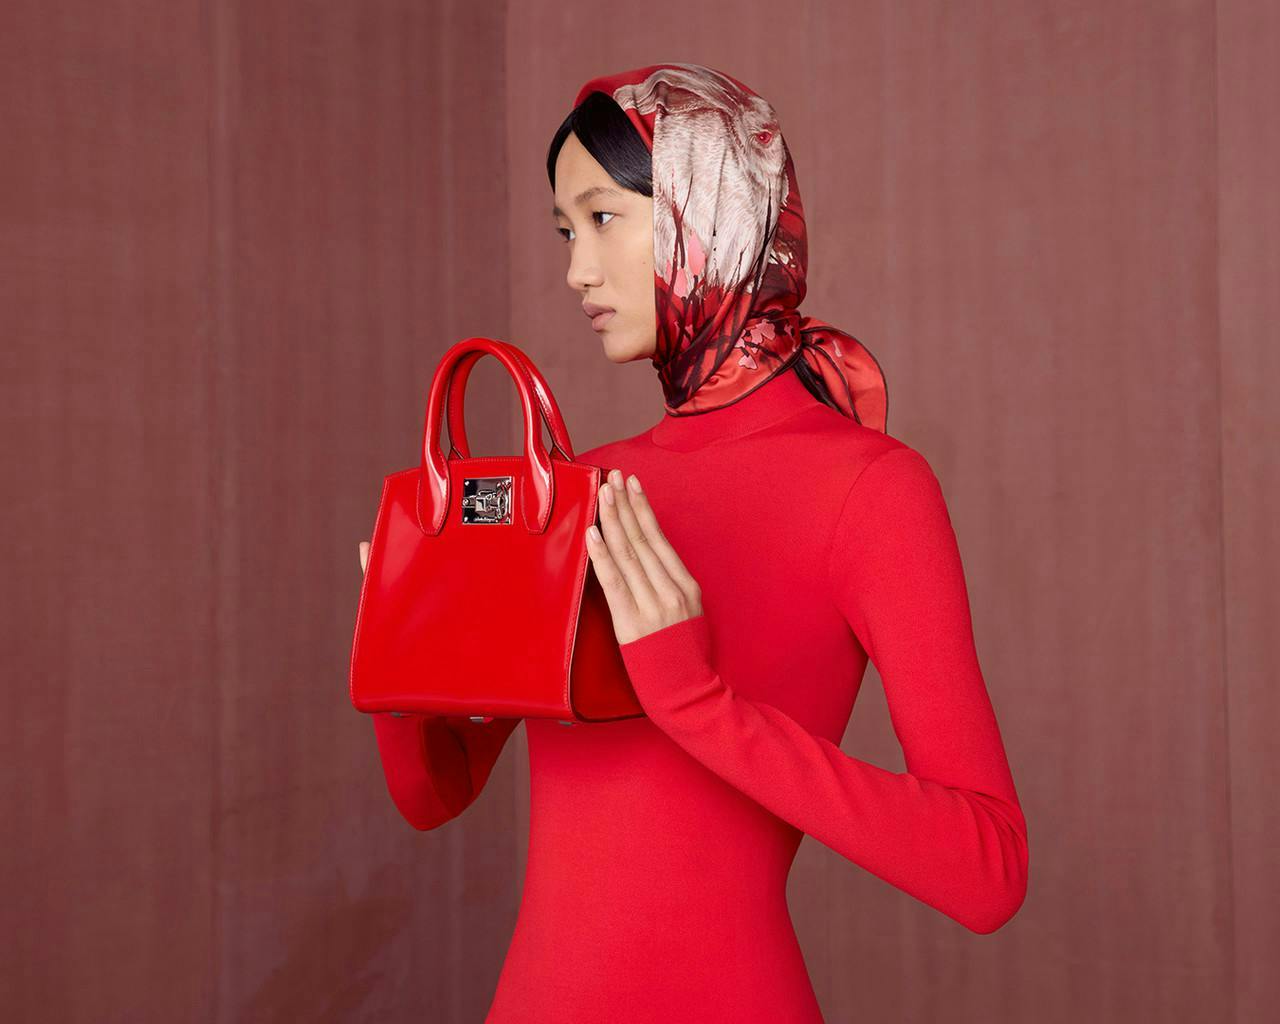 handbag bag accessories purse person woman adult female face head